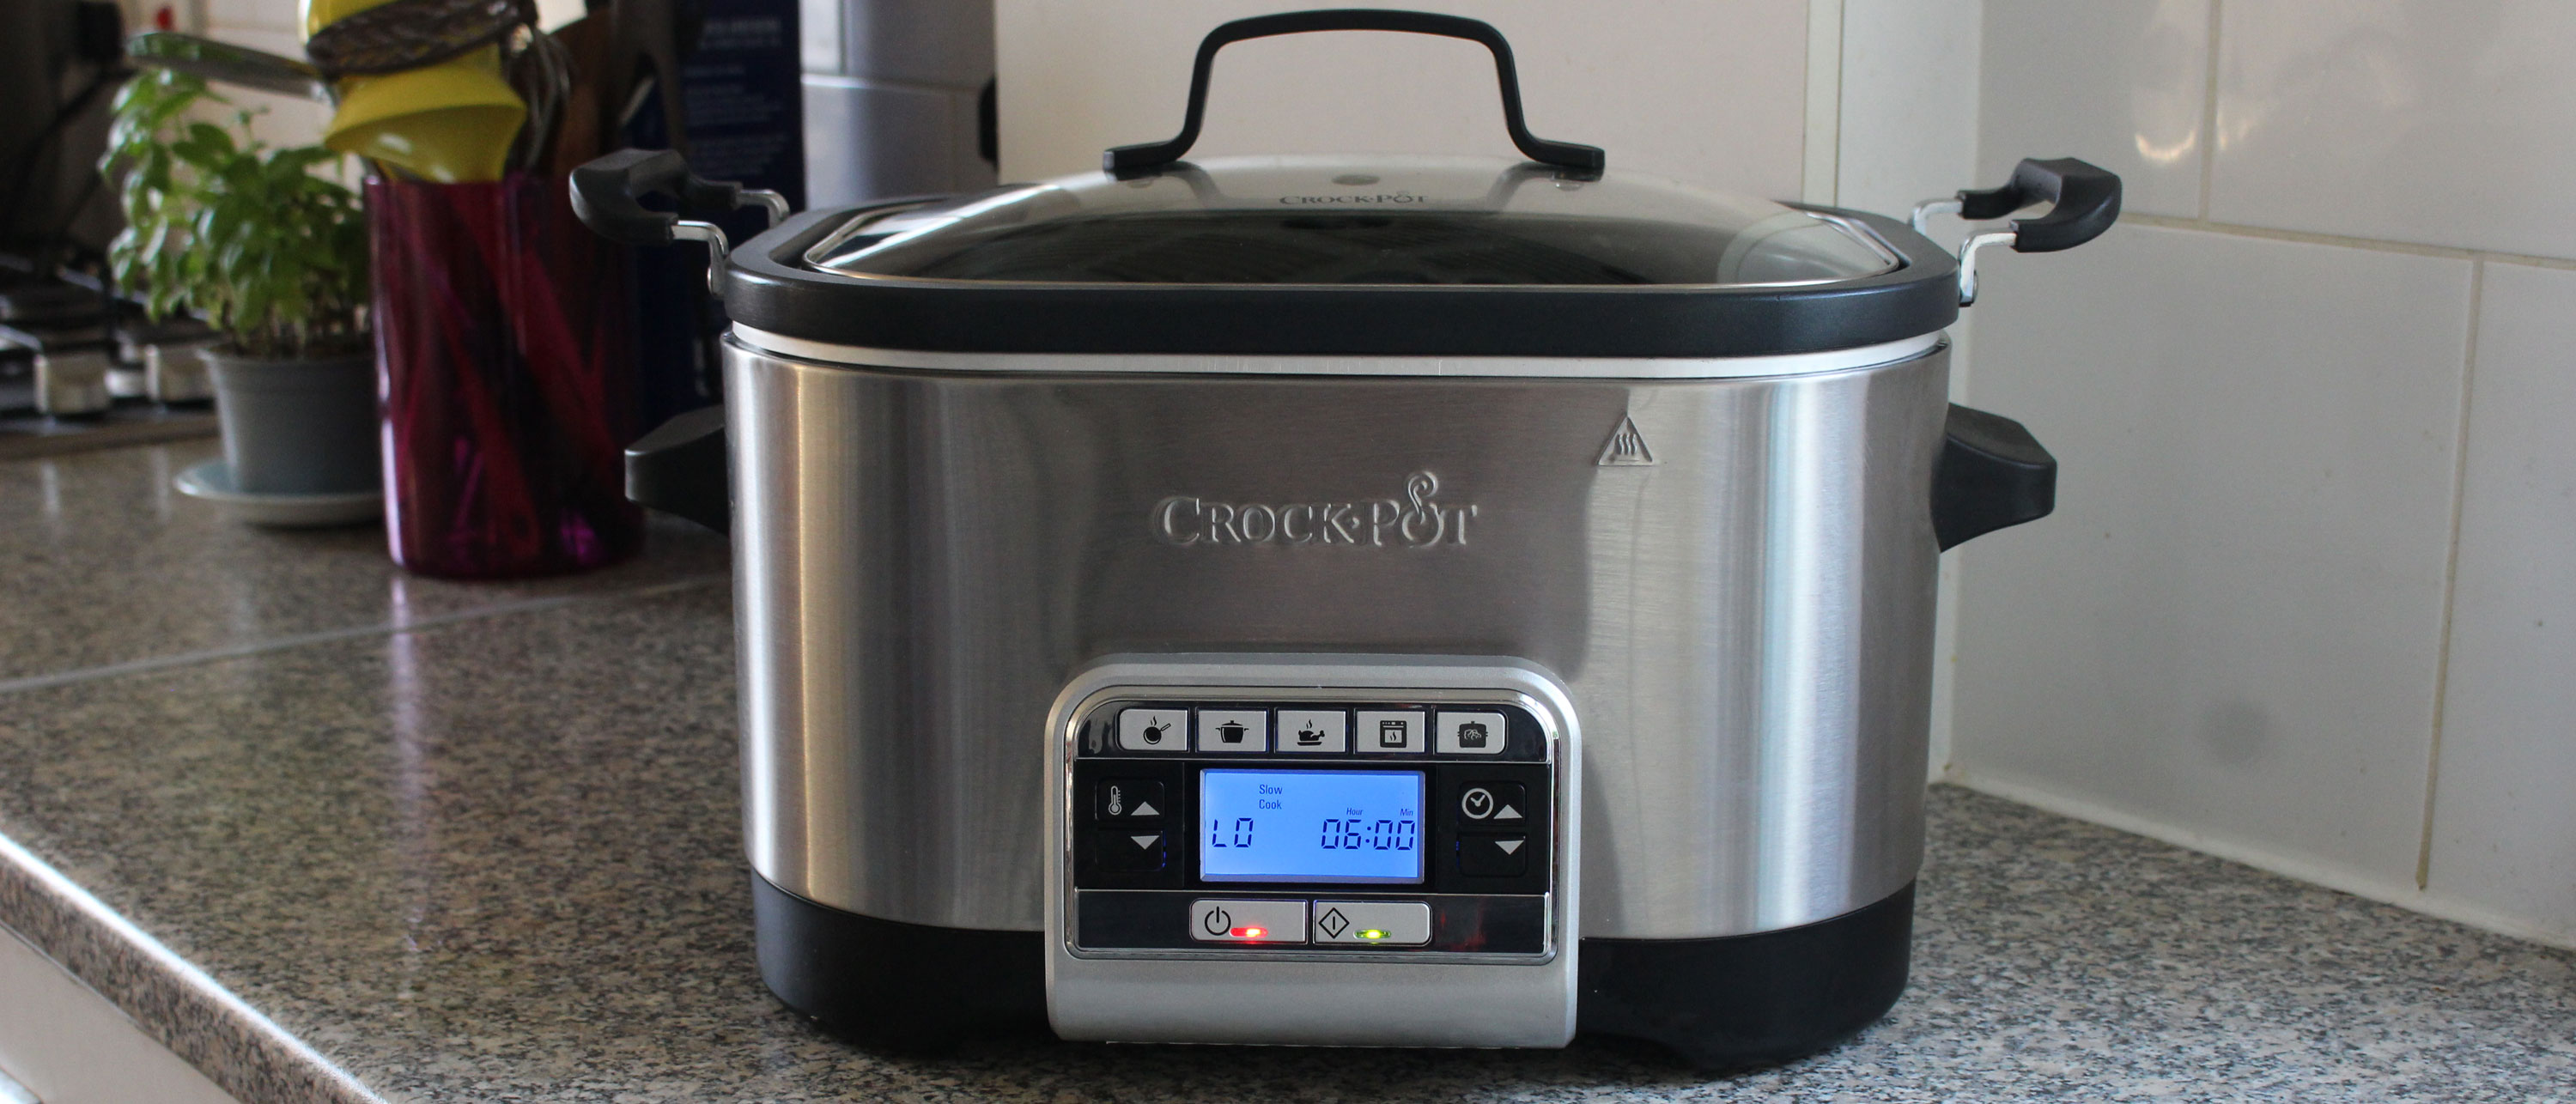 Crock-Pot CSC024 Slow Multi Cooker review | TechRadar